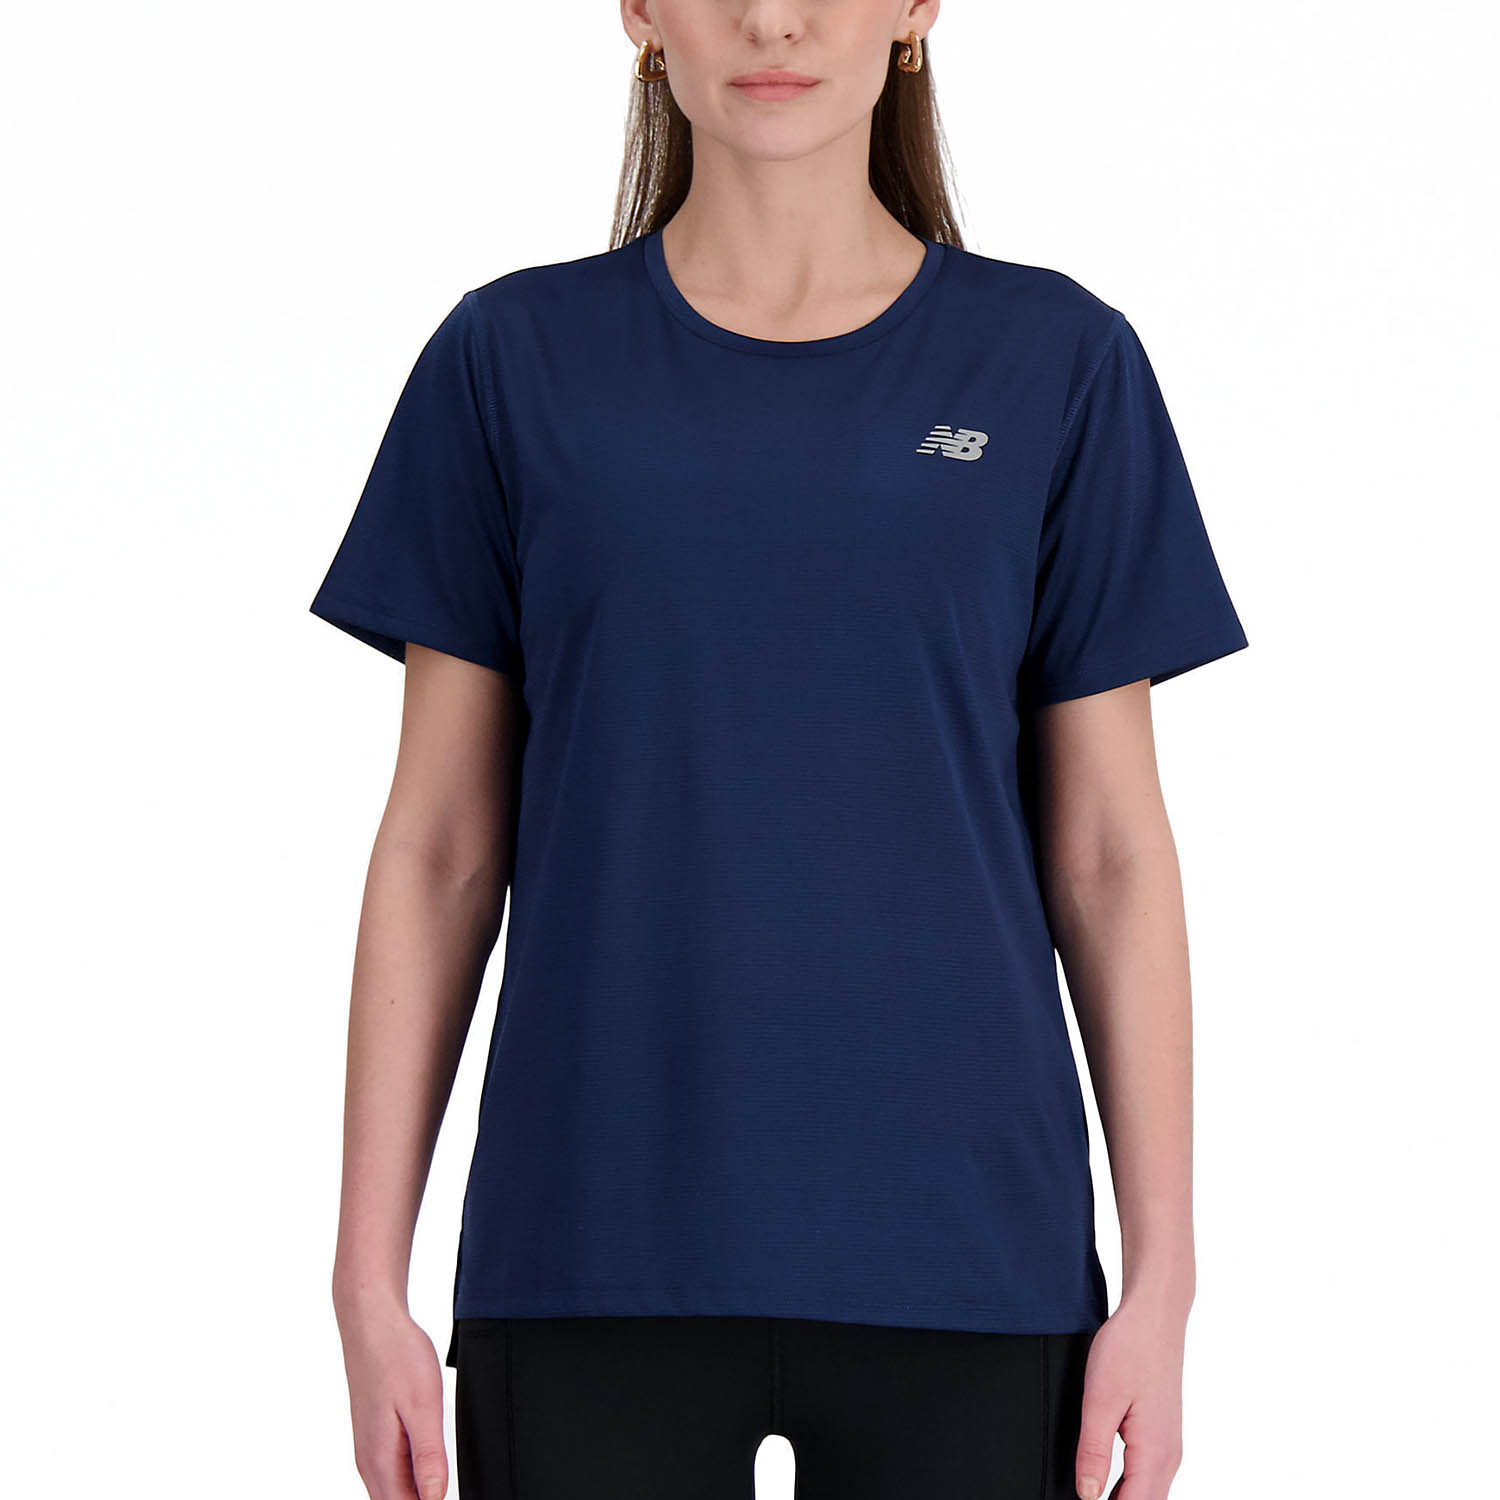 New Balance Performance Camiseta - NB Navy